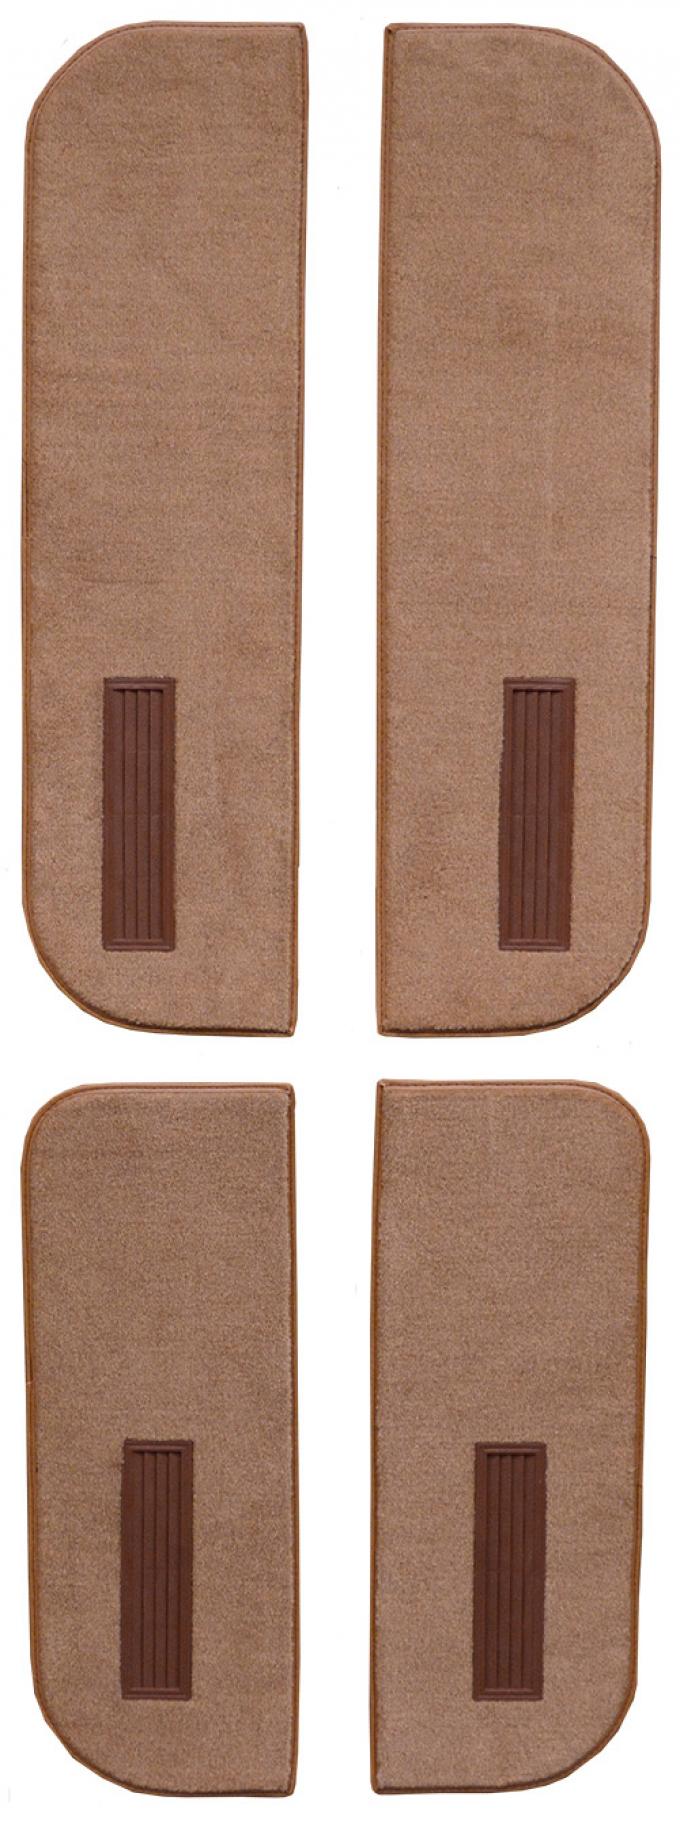 ACC 1989-1991 GMC V2500 Suburban Door Panel Inserts on Cardboard w/Vents 4pc Cutpile Carpet